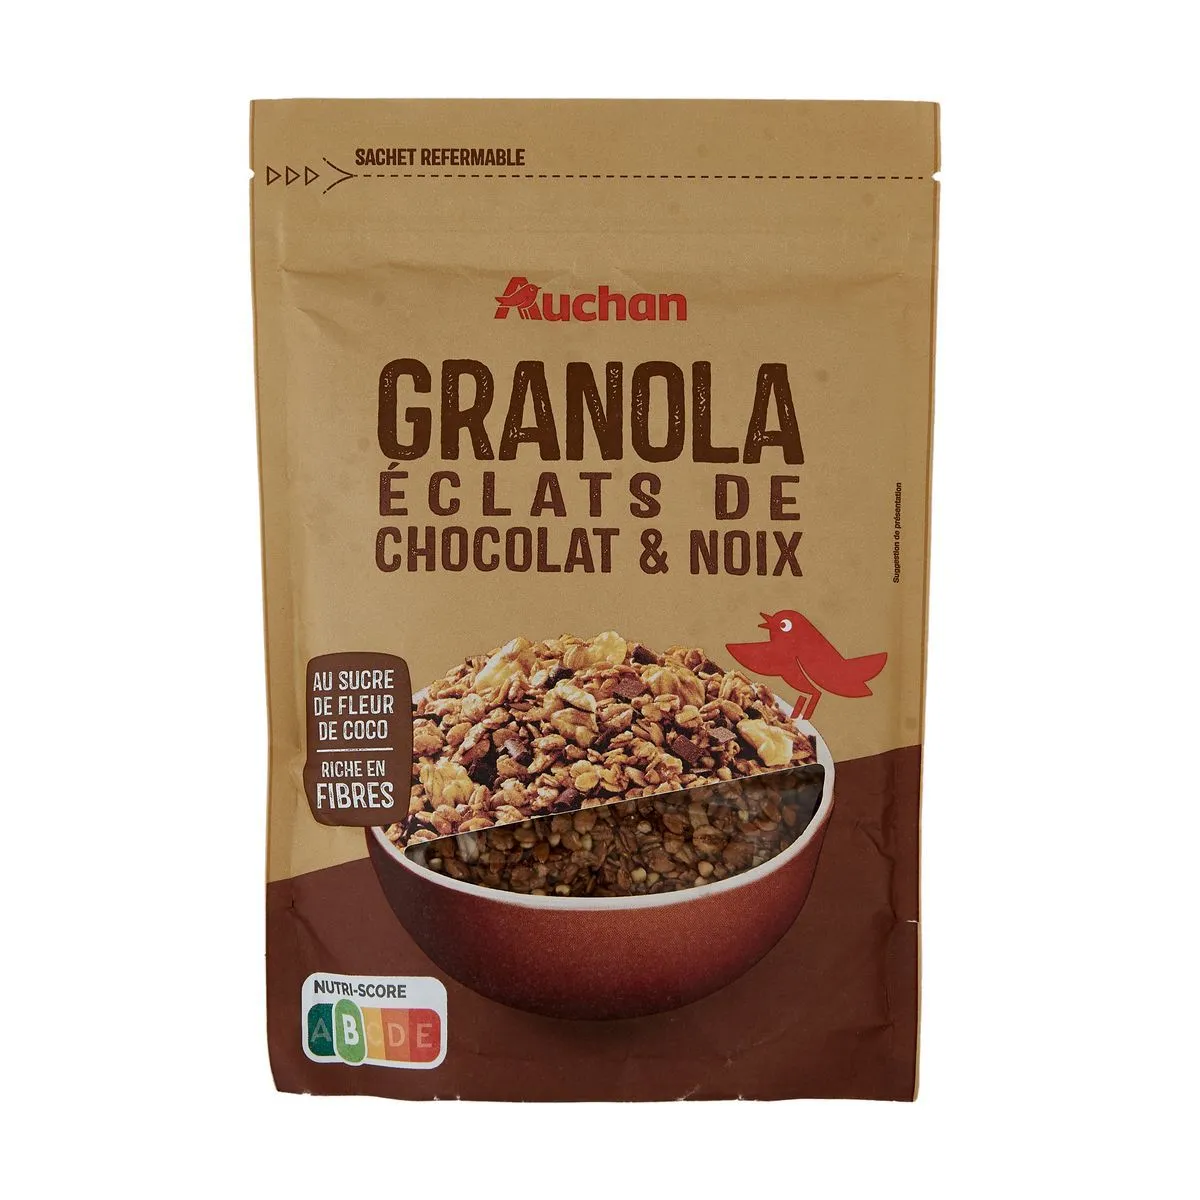 granola eclats de chocolat & noix auchan